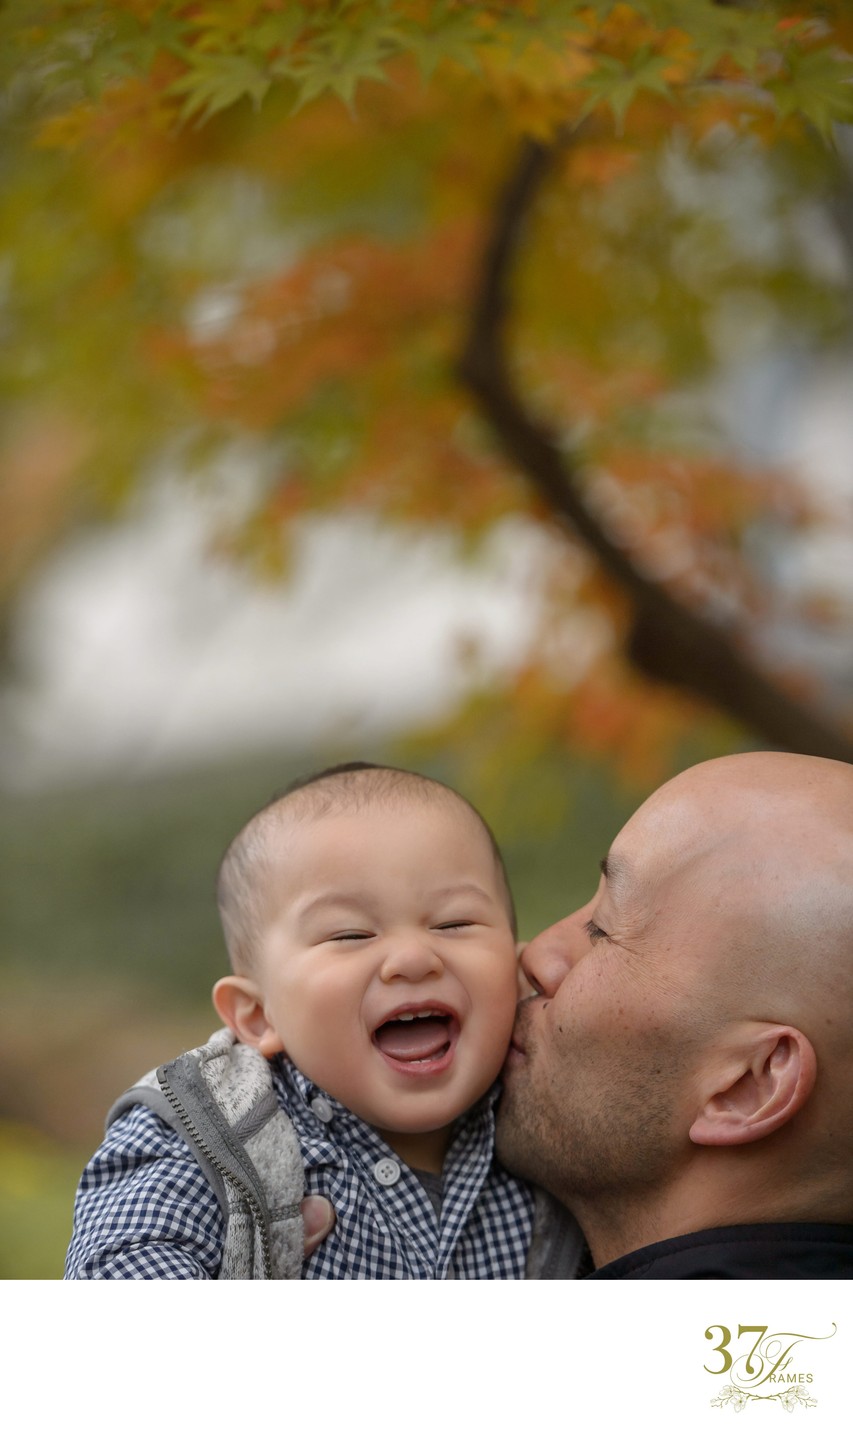 Fatherhood Moments | The Perfect Gift